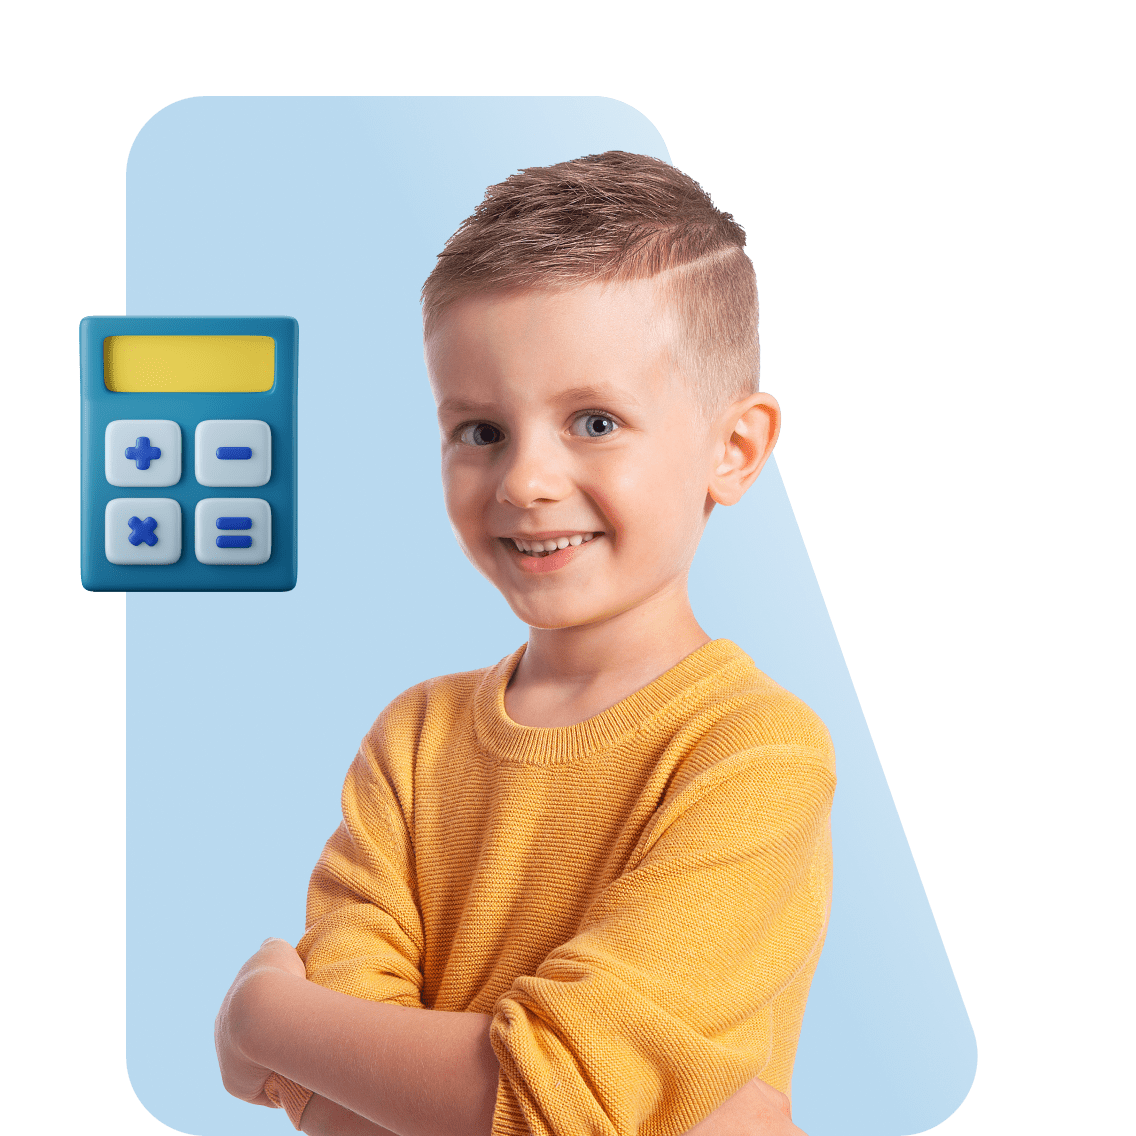 Kindergarten image 9 (name 1 Young Boy Yellow Shirt Math)